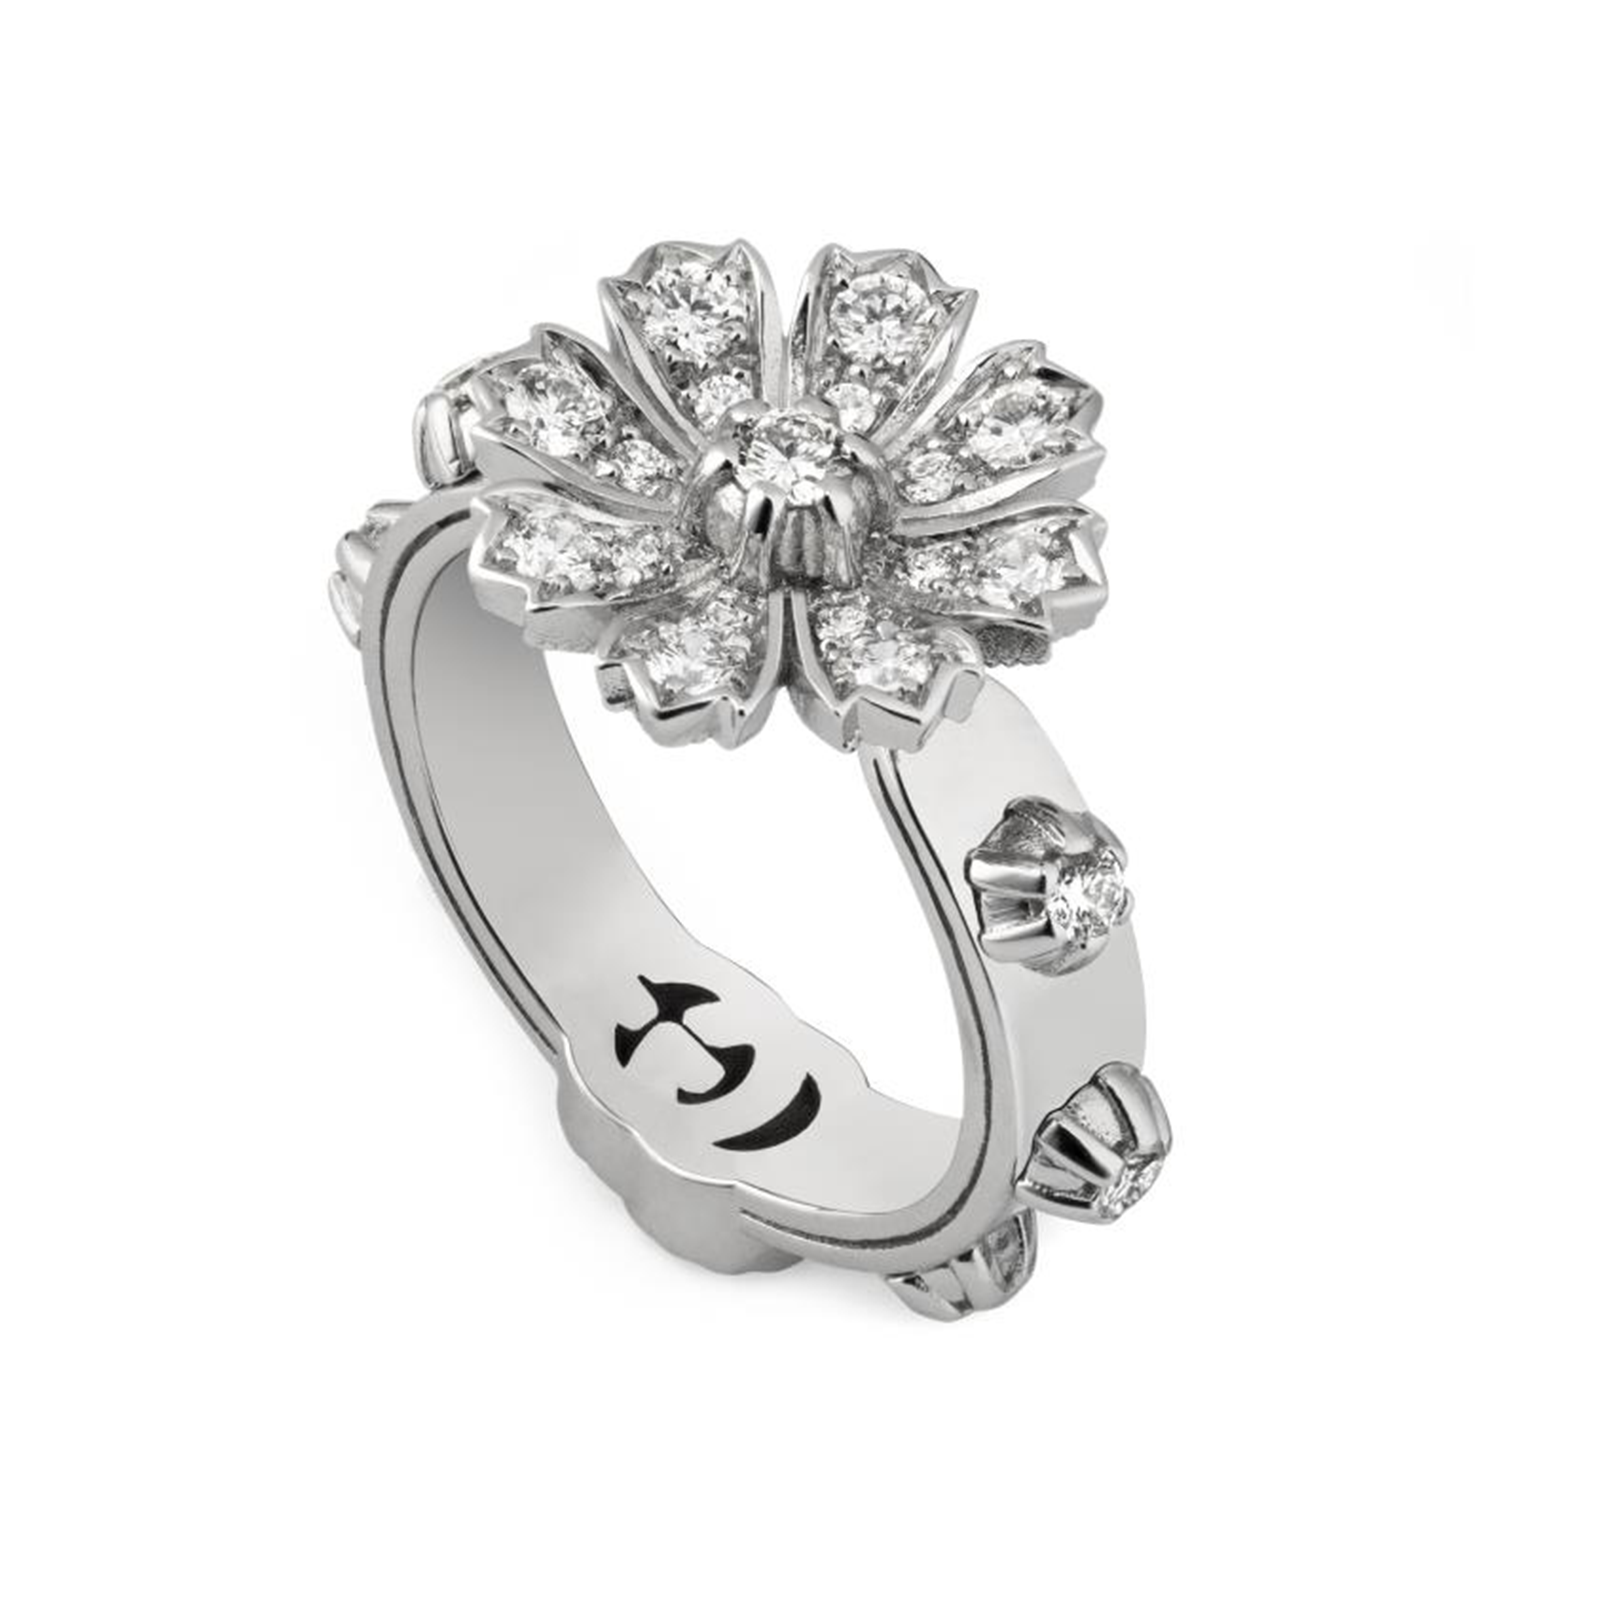 18ct White Gold Diamond Ring - Size 8